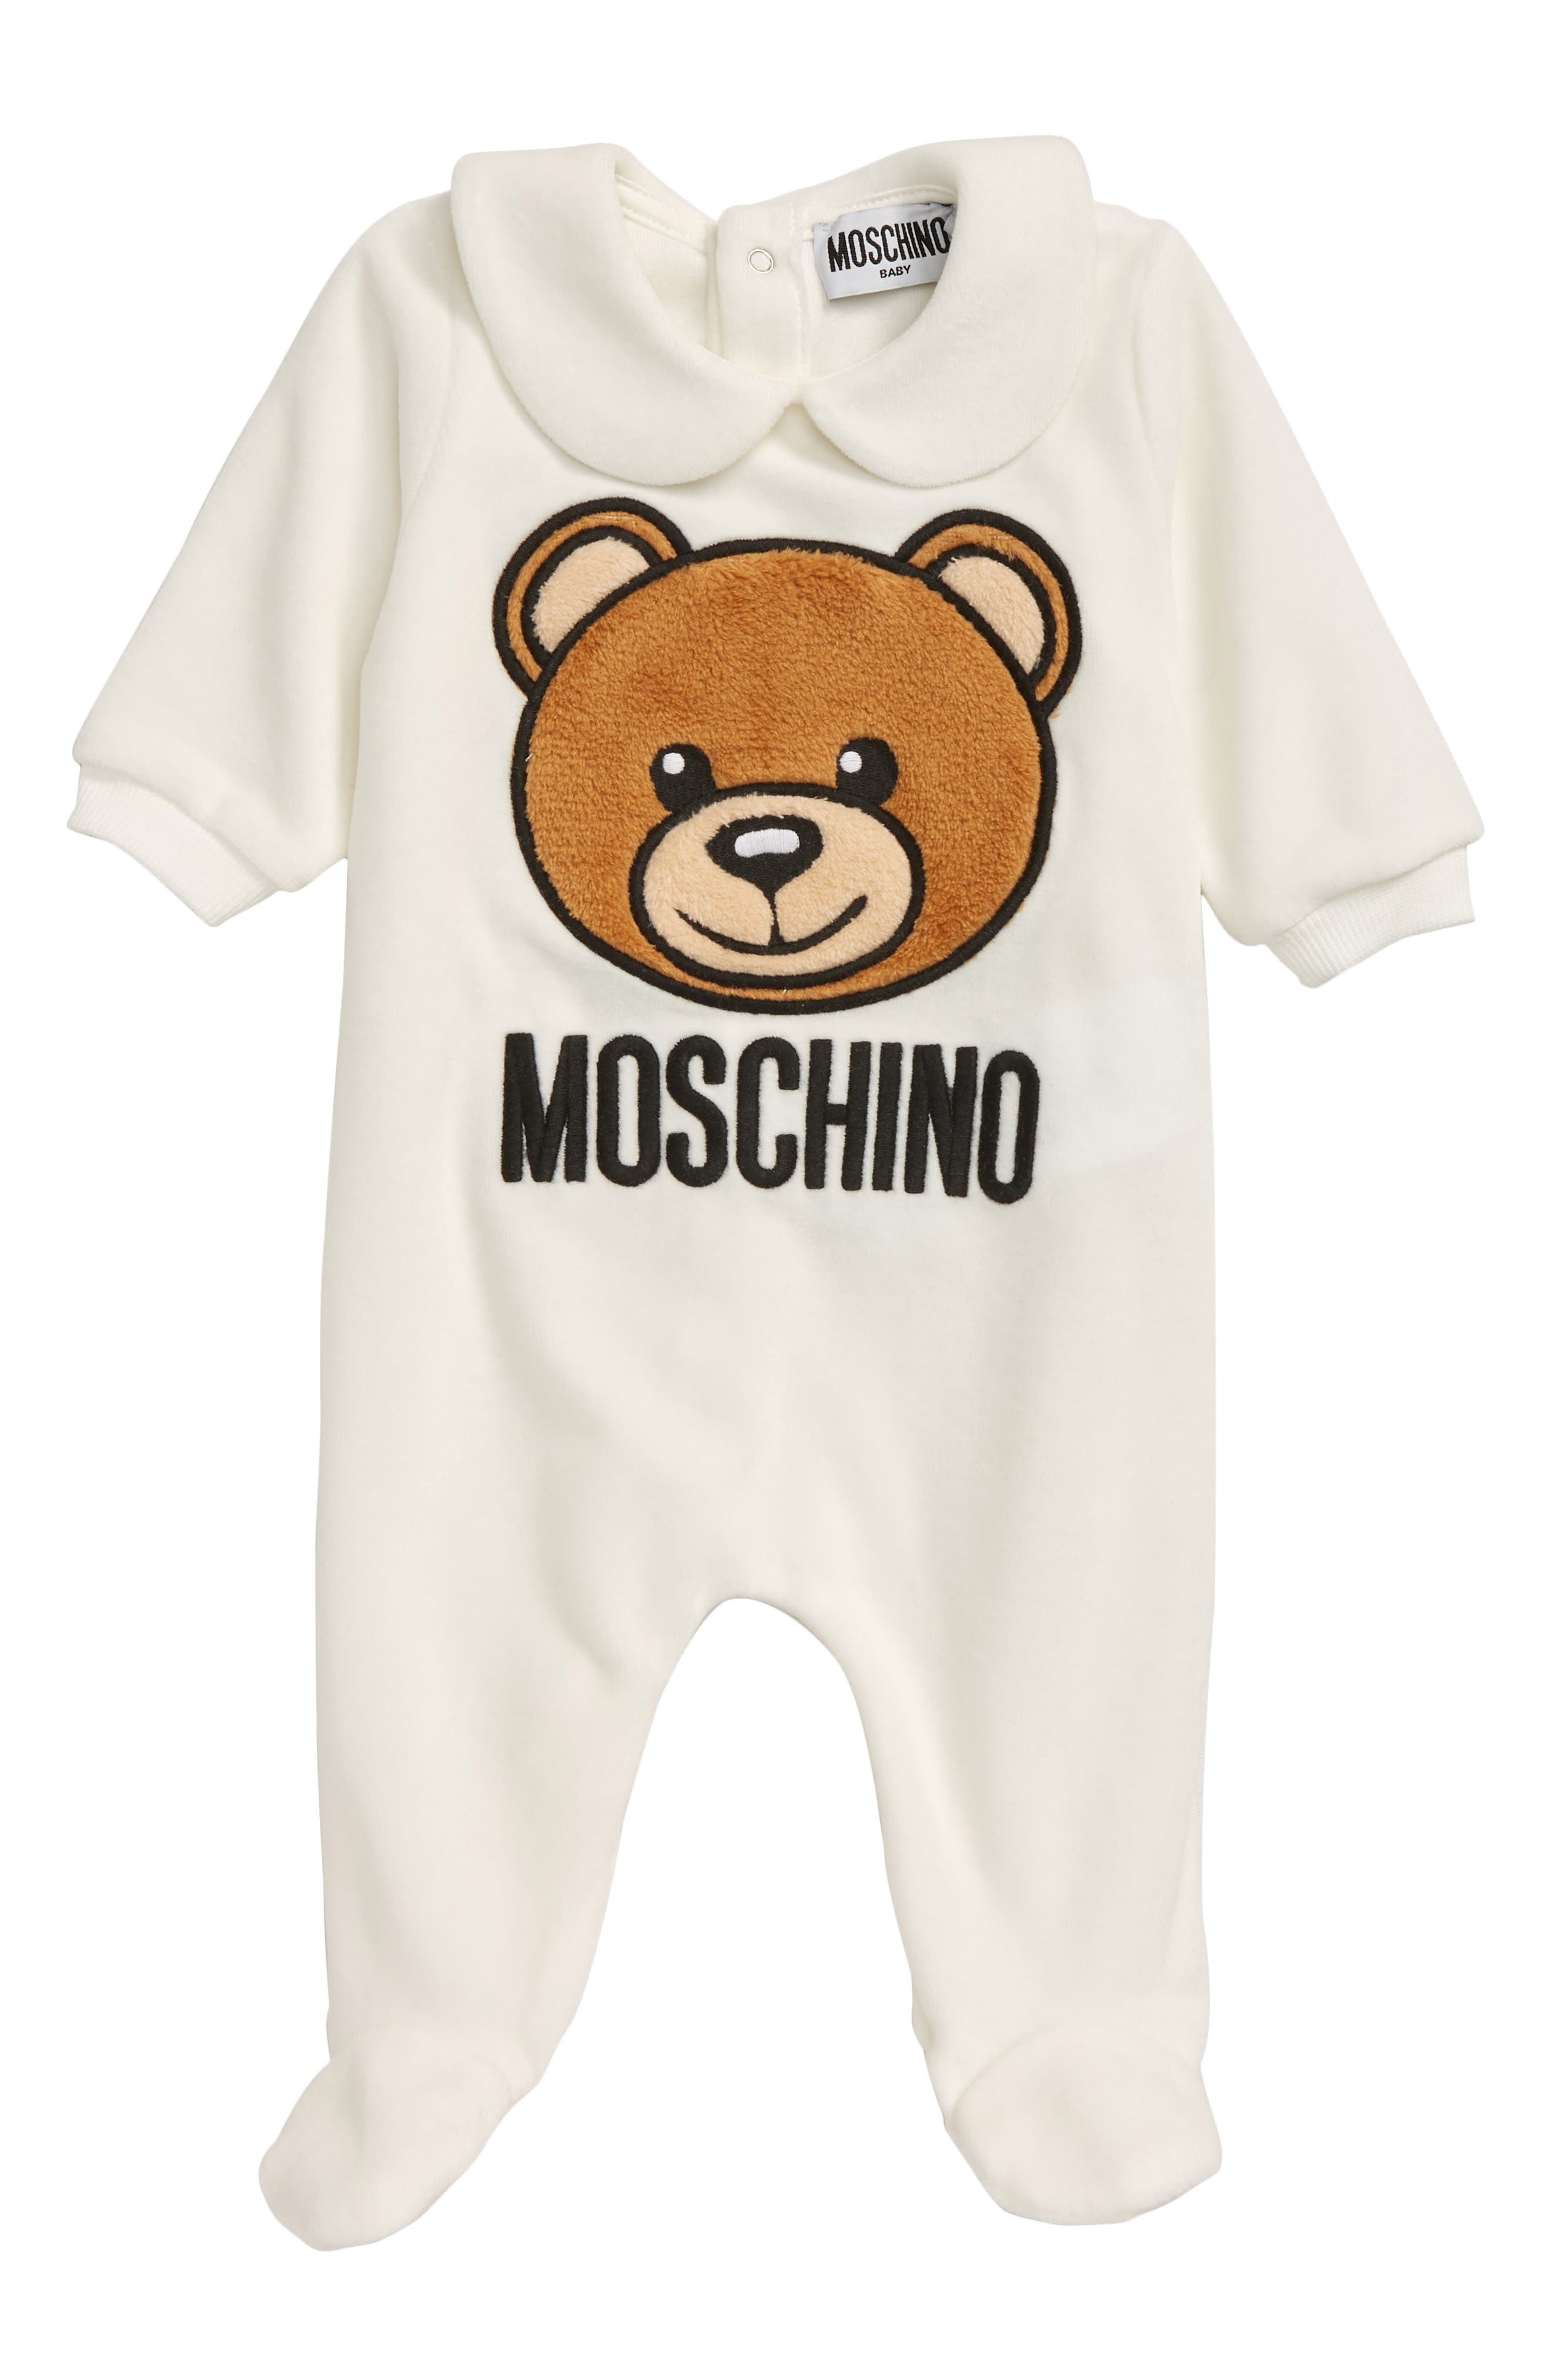 moschino baby sale Off 69% - www.loverethymno.com